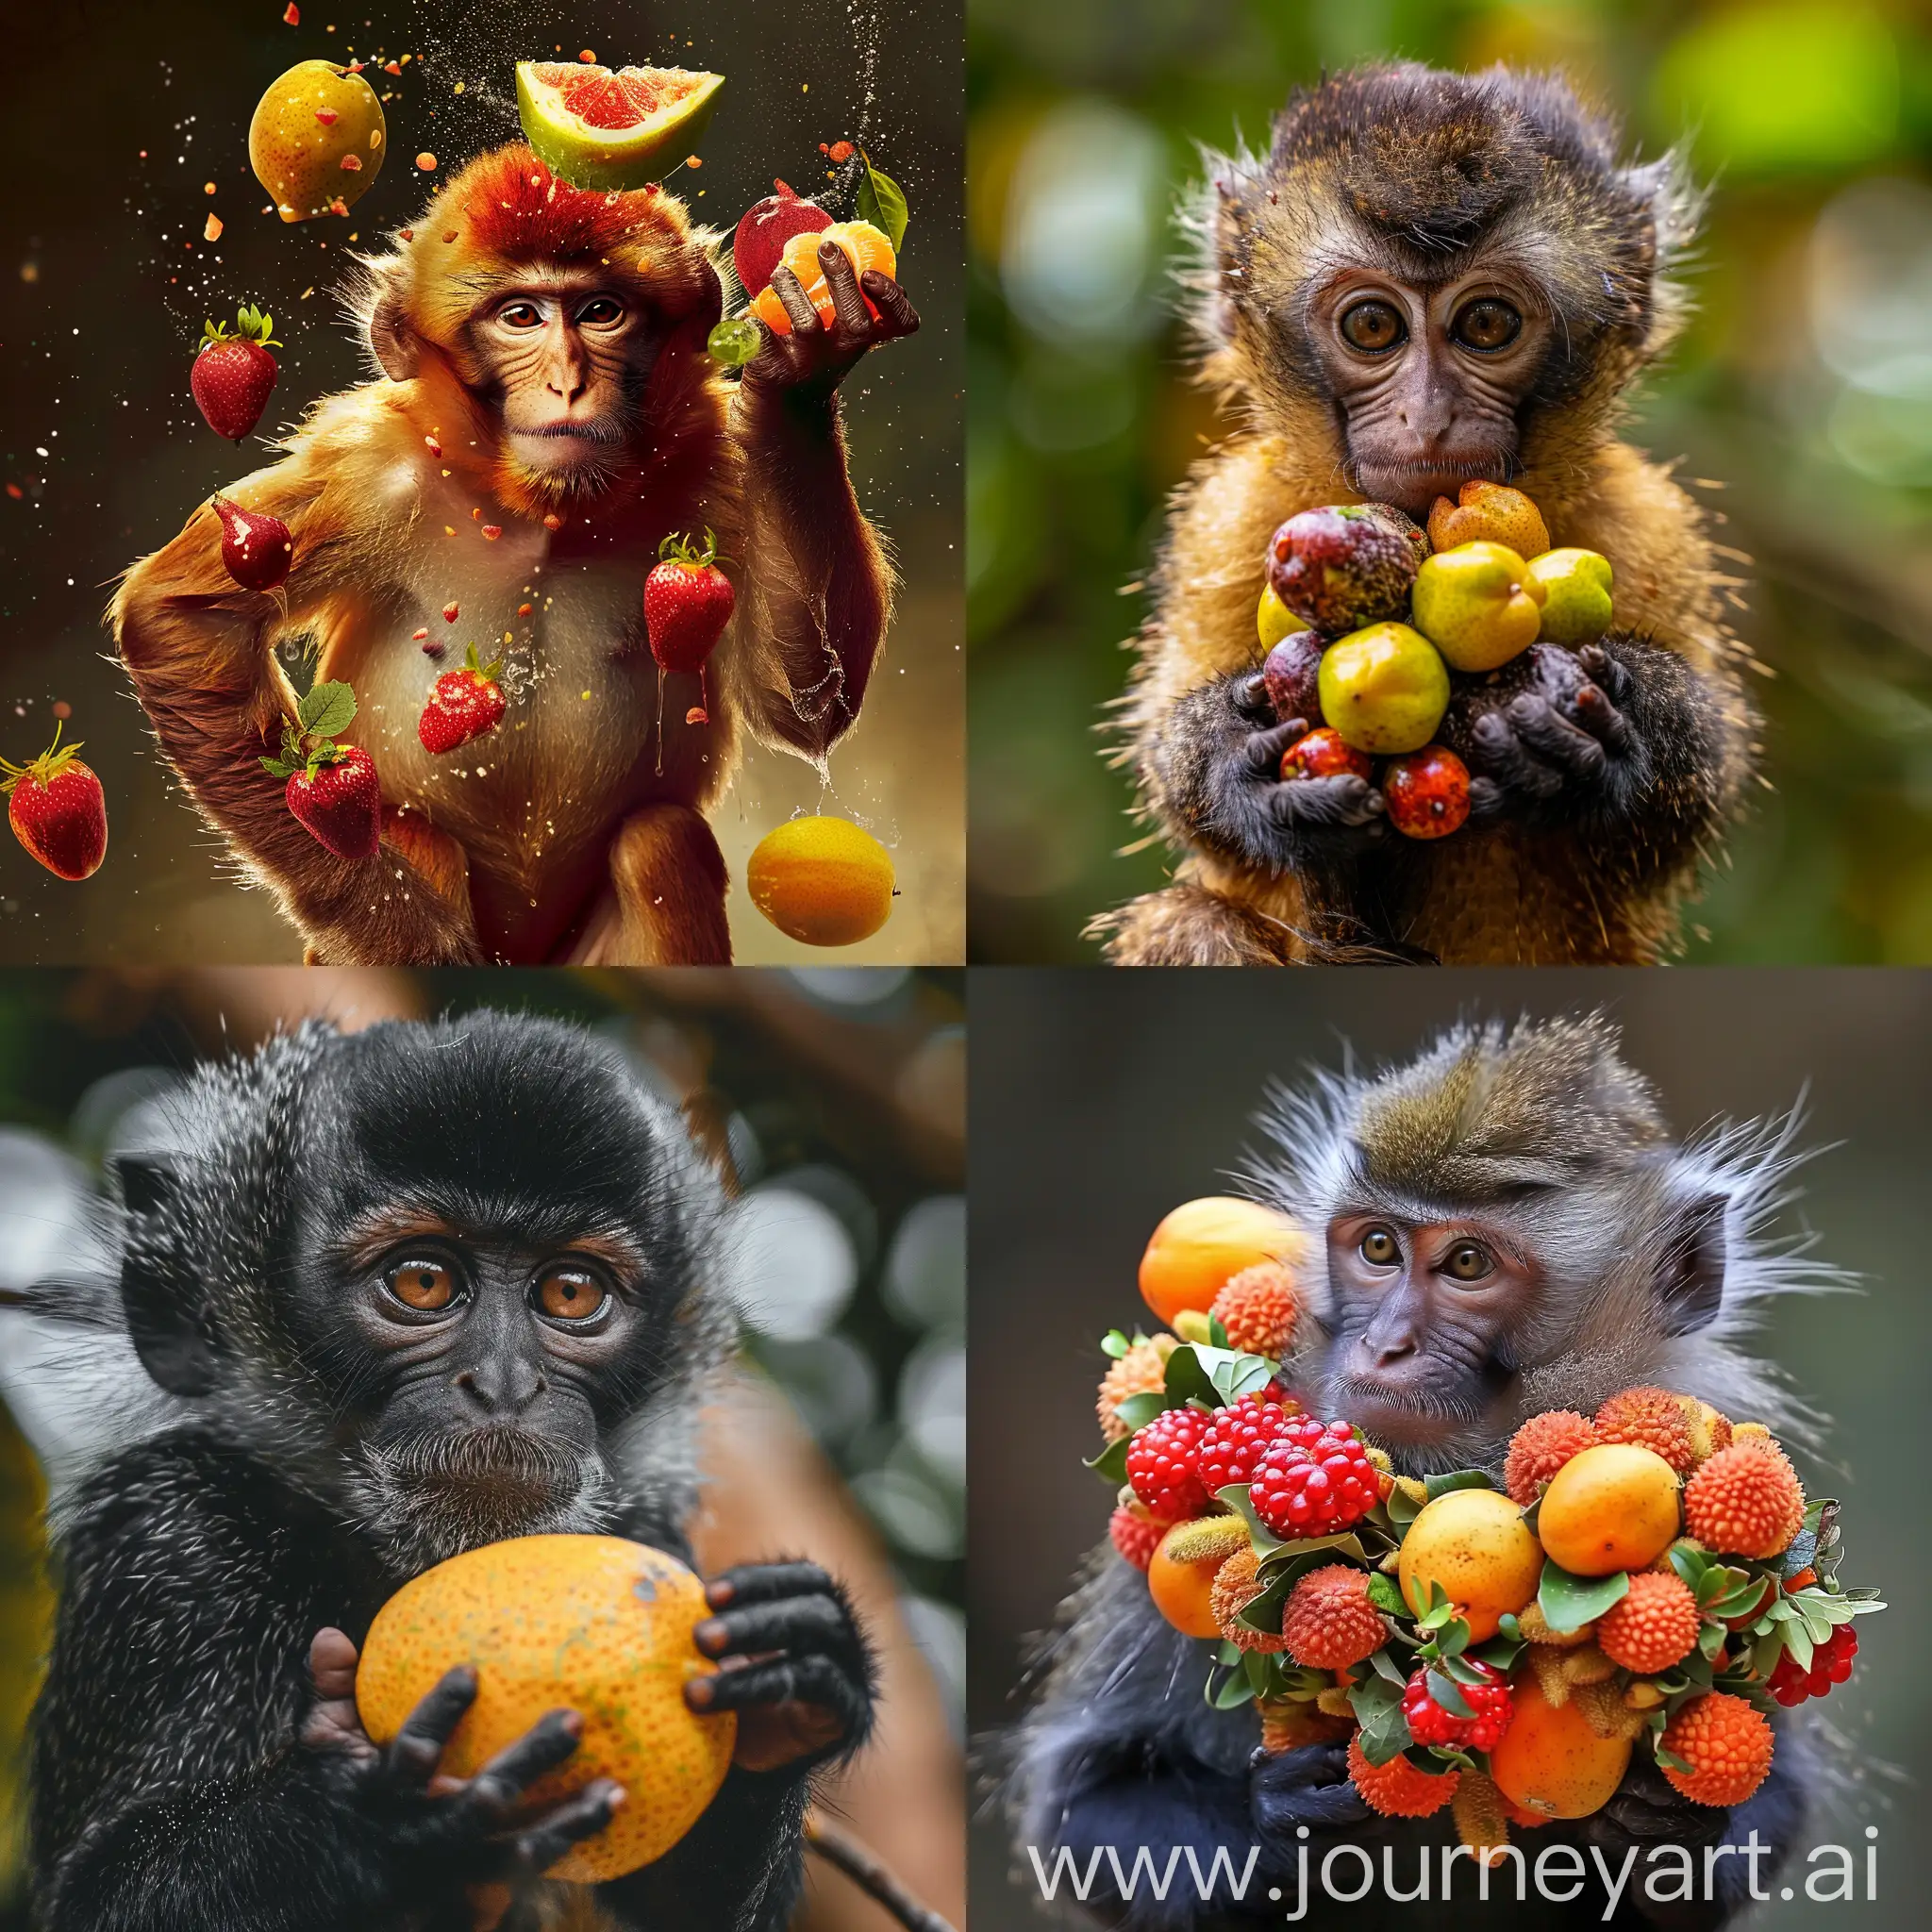 Magic monkey that turns into fruit